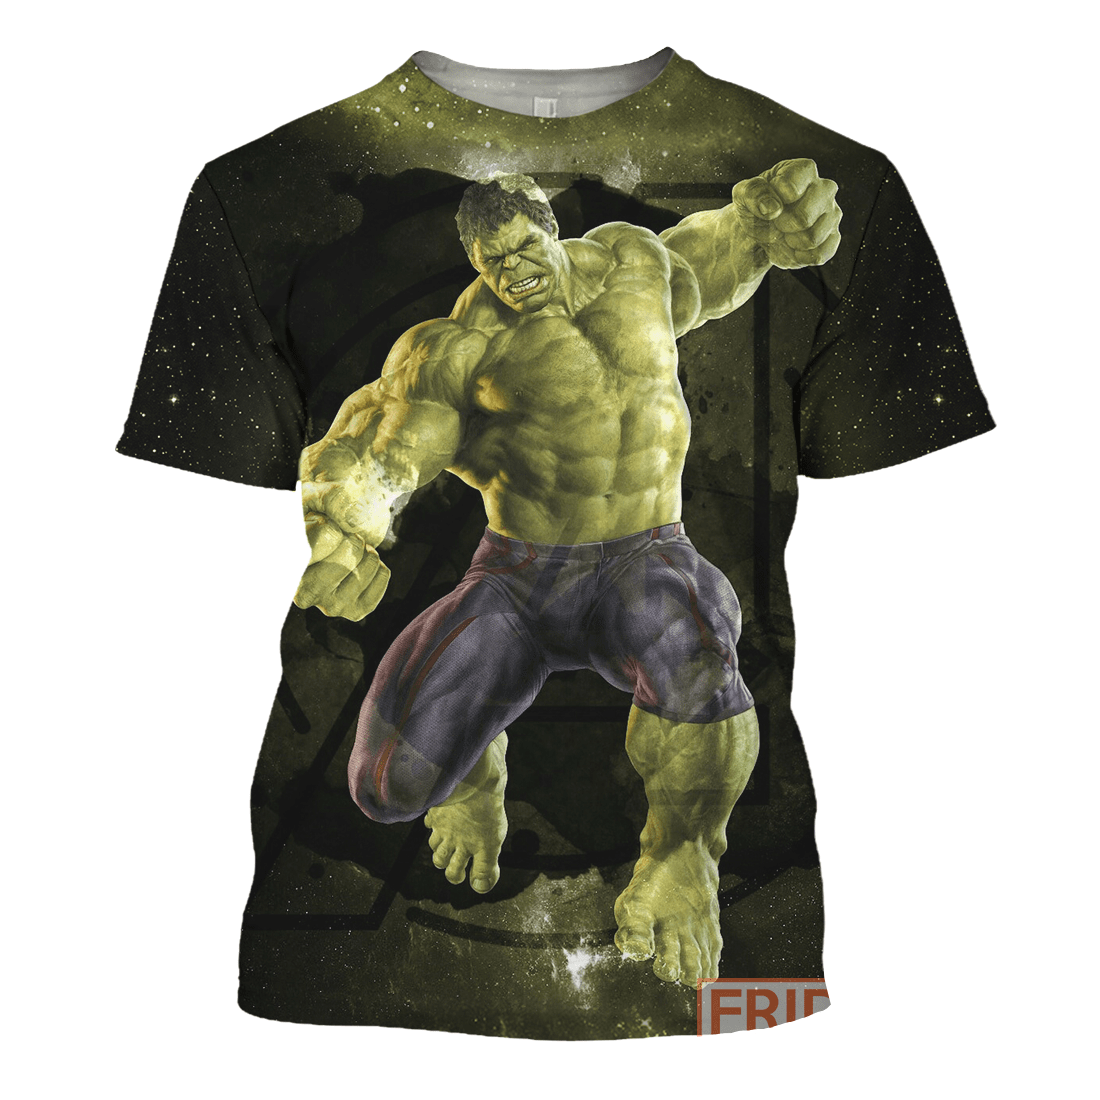 Unifinz MV Hulk Hoodie The Incredible H Galaxy T-shirt Amazing MV Hulk Shirt Sweater Tank 2025